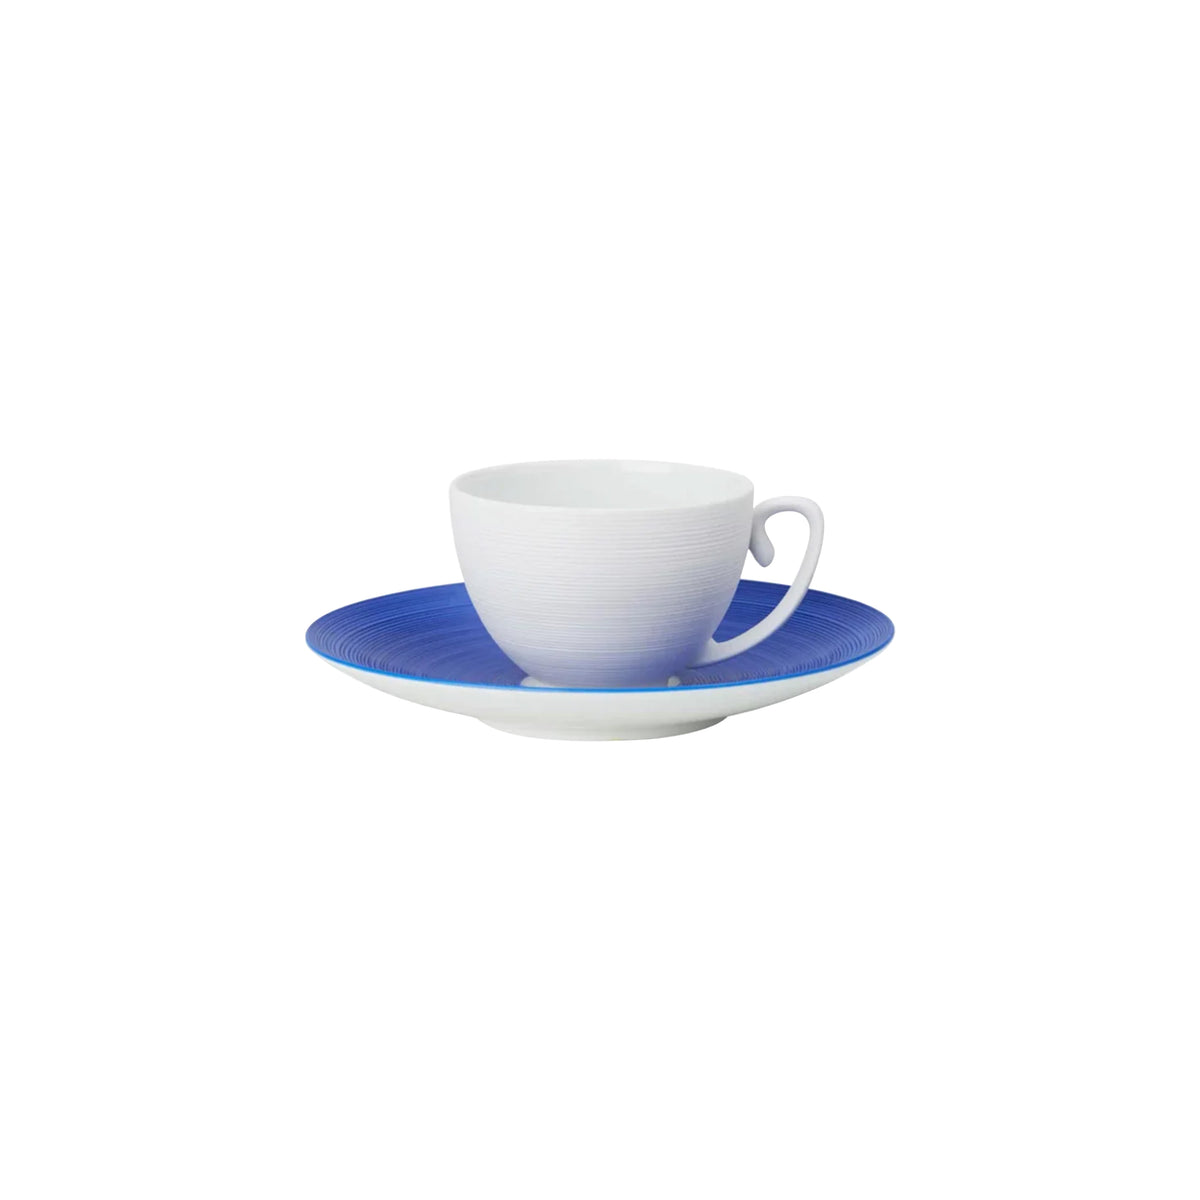 HEMISPHERE Royal Blue - Coffee set (cup & saucer)